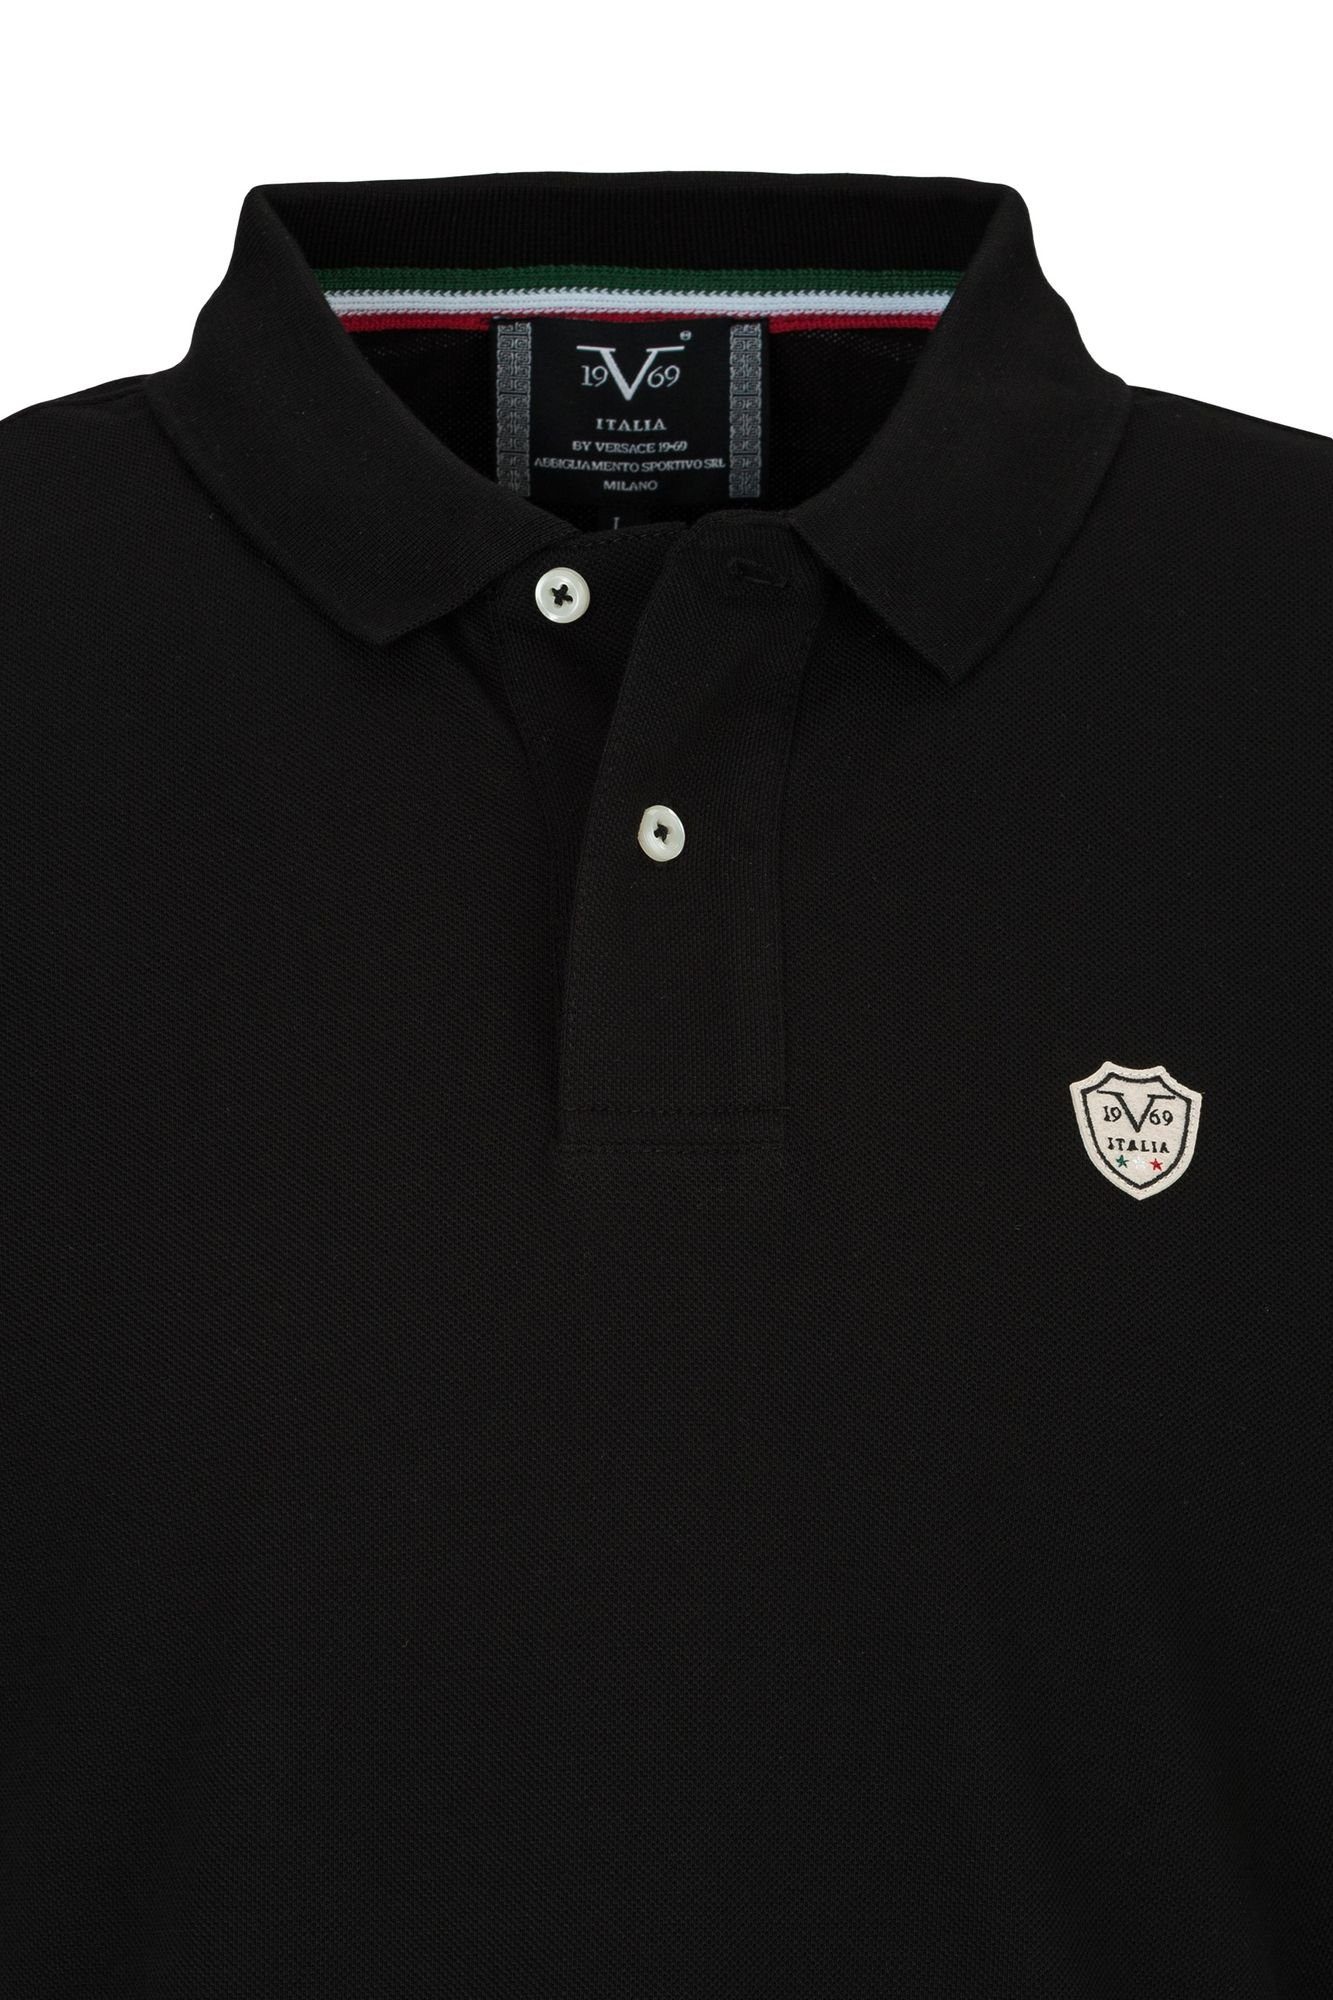 Versace Felt 19V69 Italia Poloshirt by